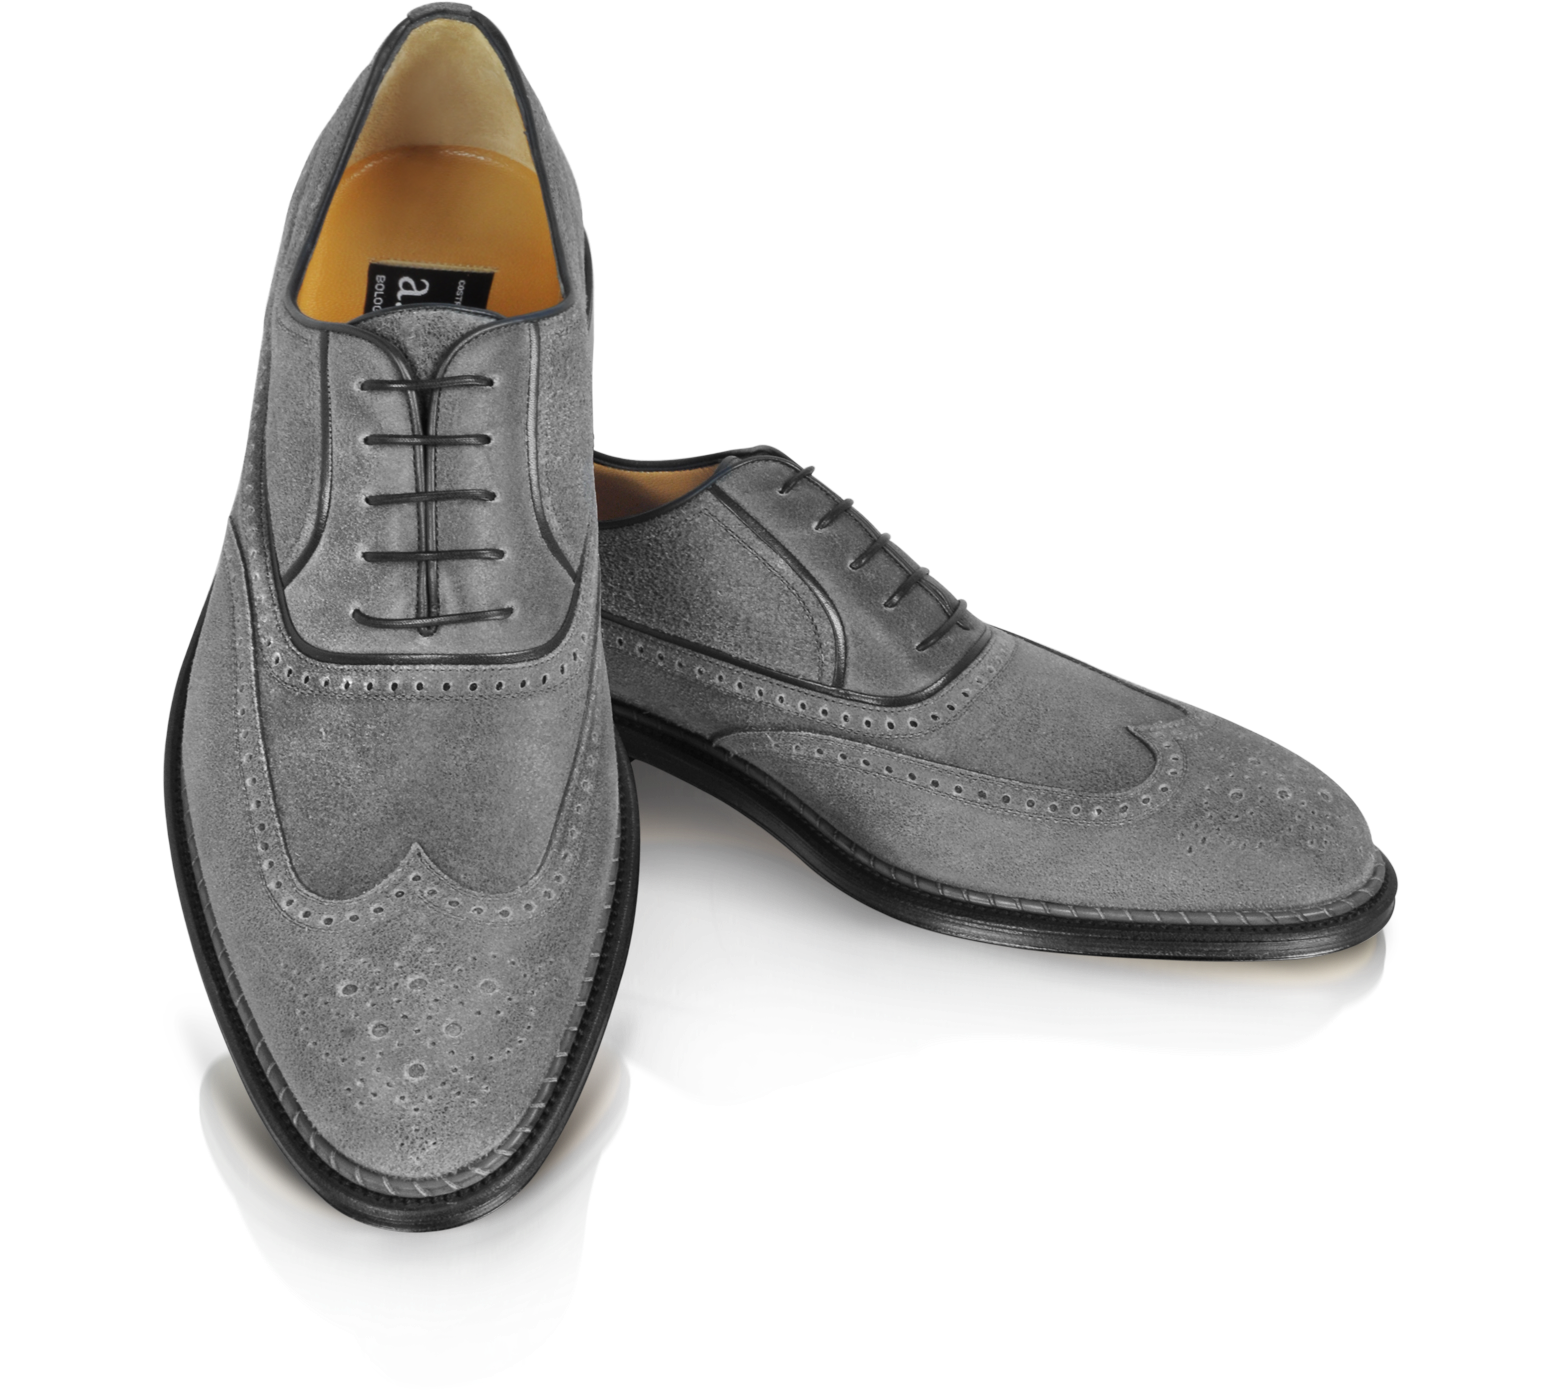 A.Testoni Gray Wingtip Oxford Shoes 7.5 